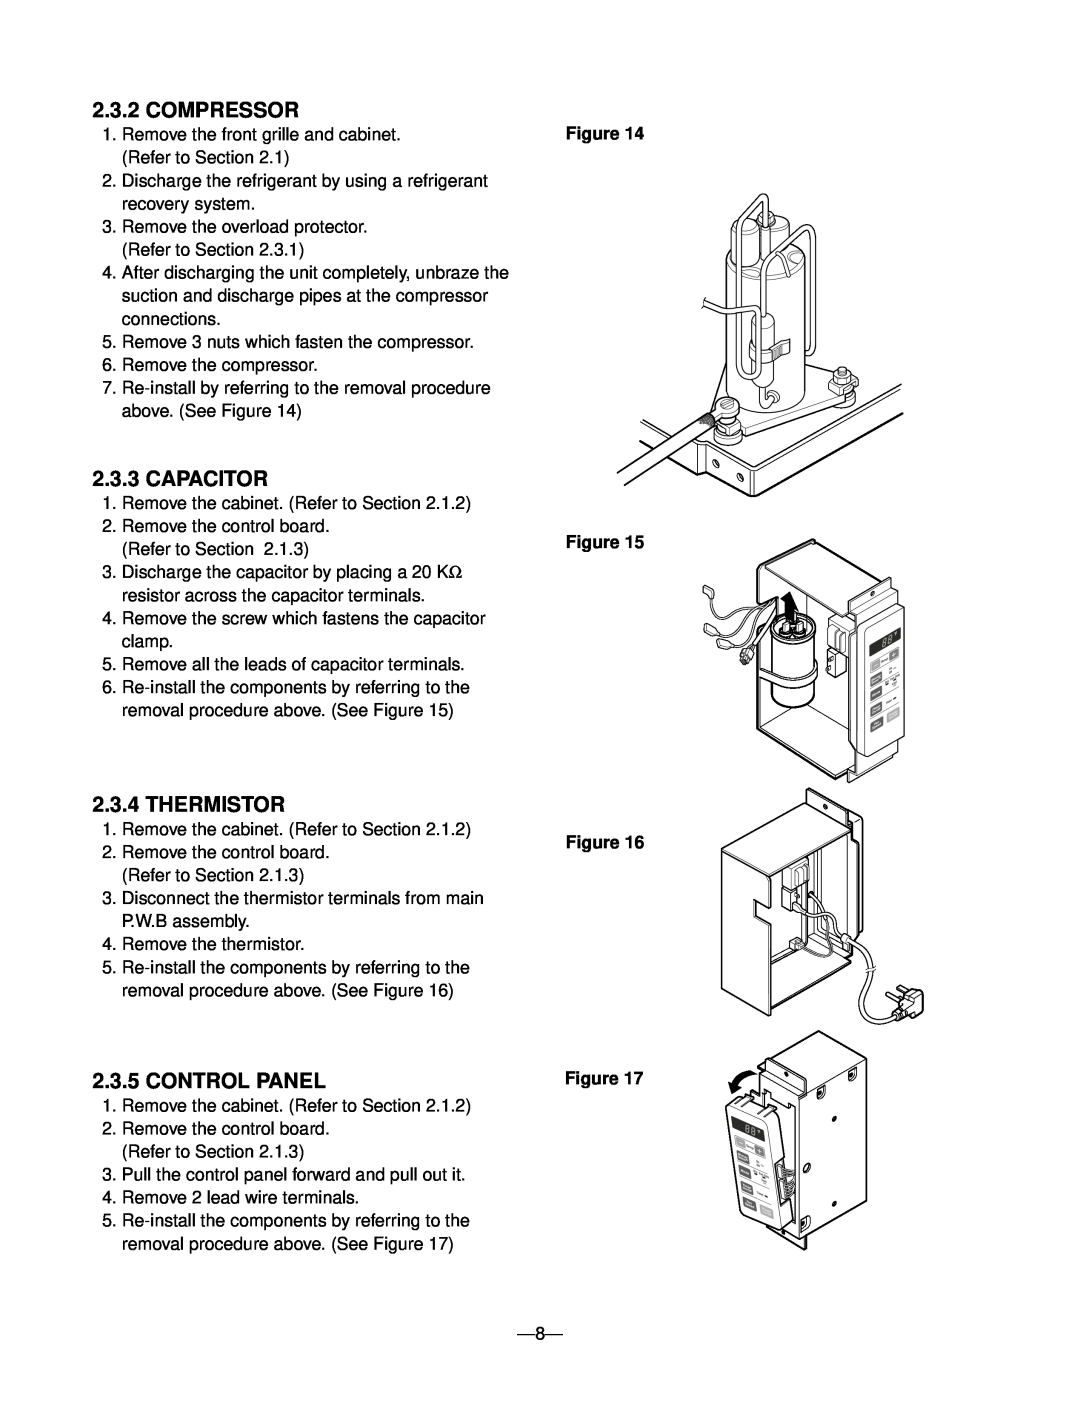 Friedrich CP05A10, CP06A10 manual Compressor, Capacitor, Thermistor, Control Panel, Figure Figure 